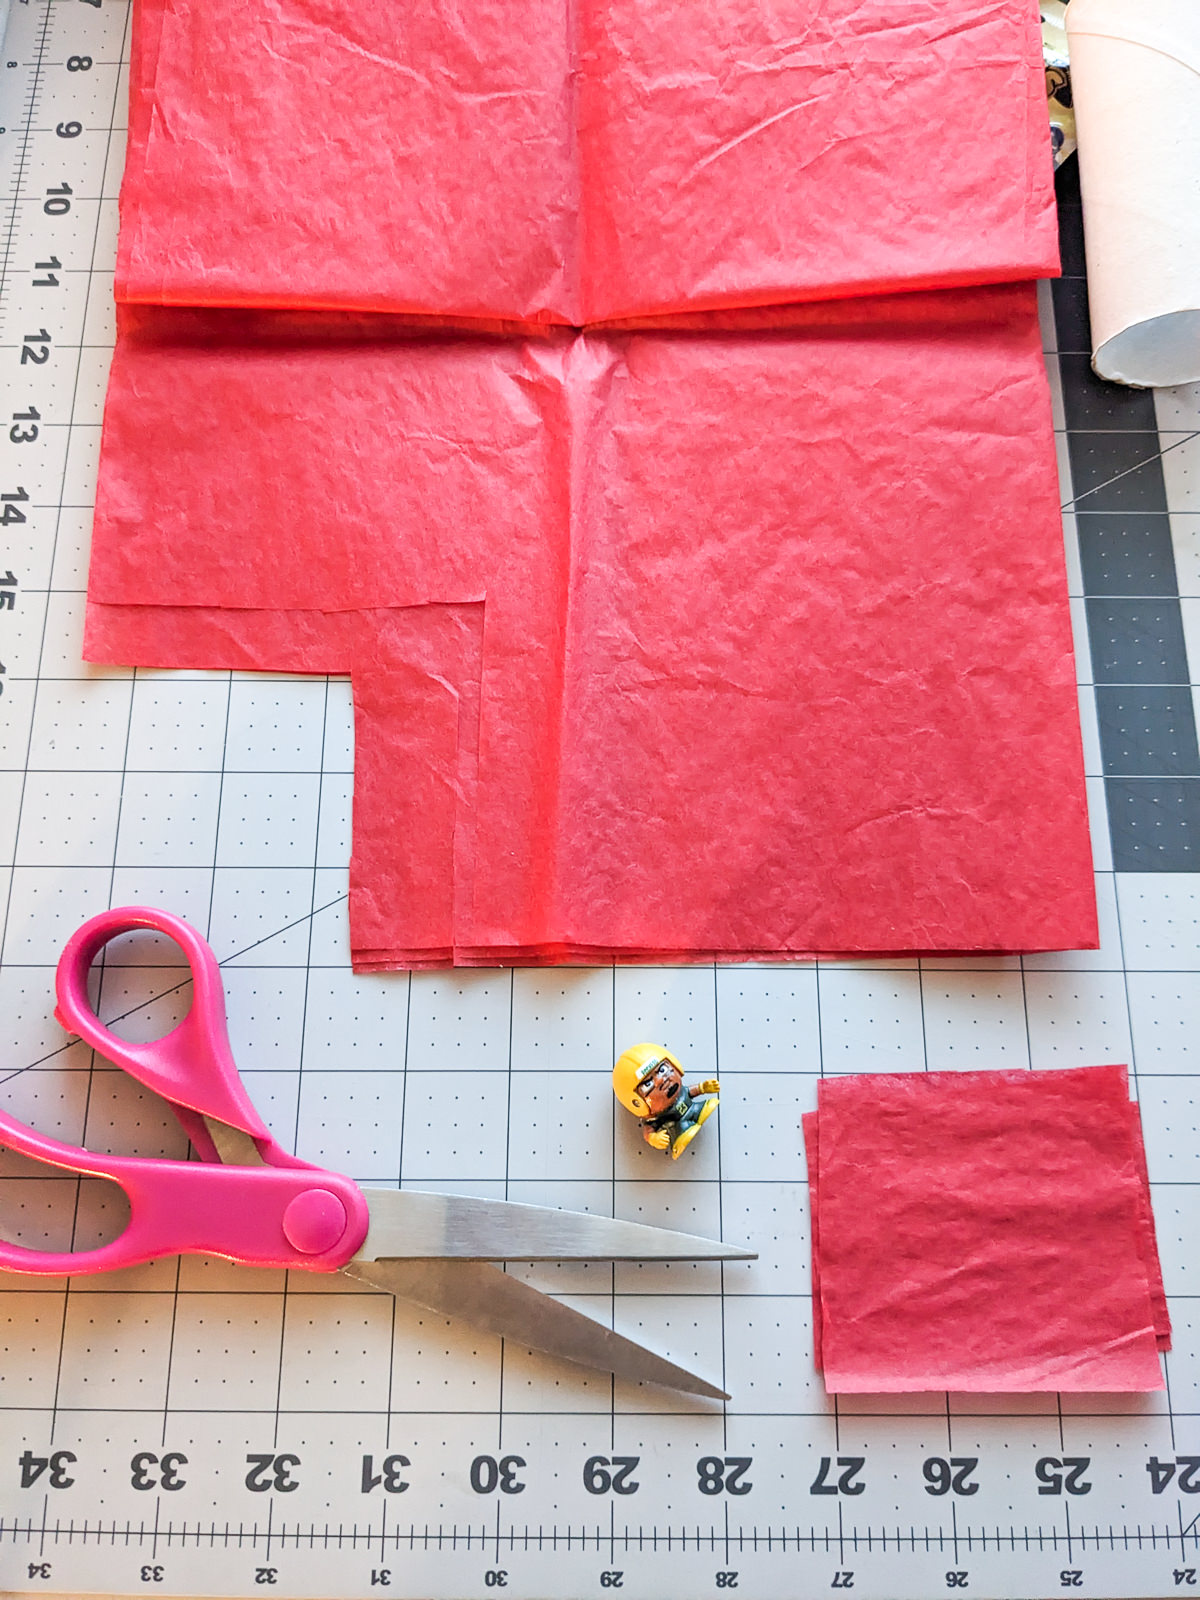 Cutting tissue paper with scissors to make a handmade advent calendar